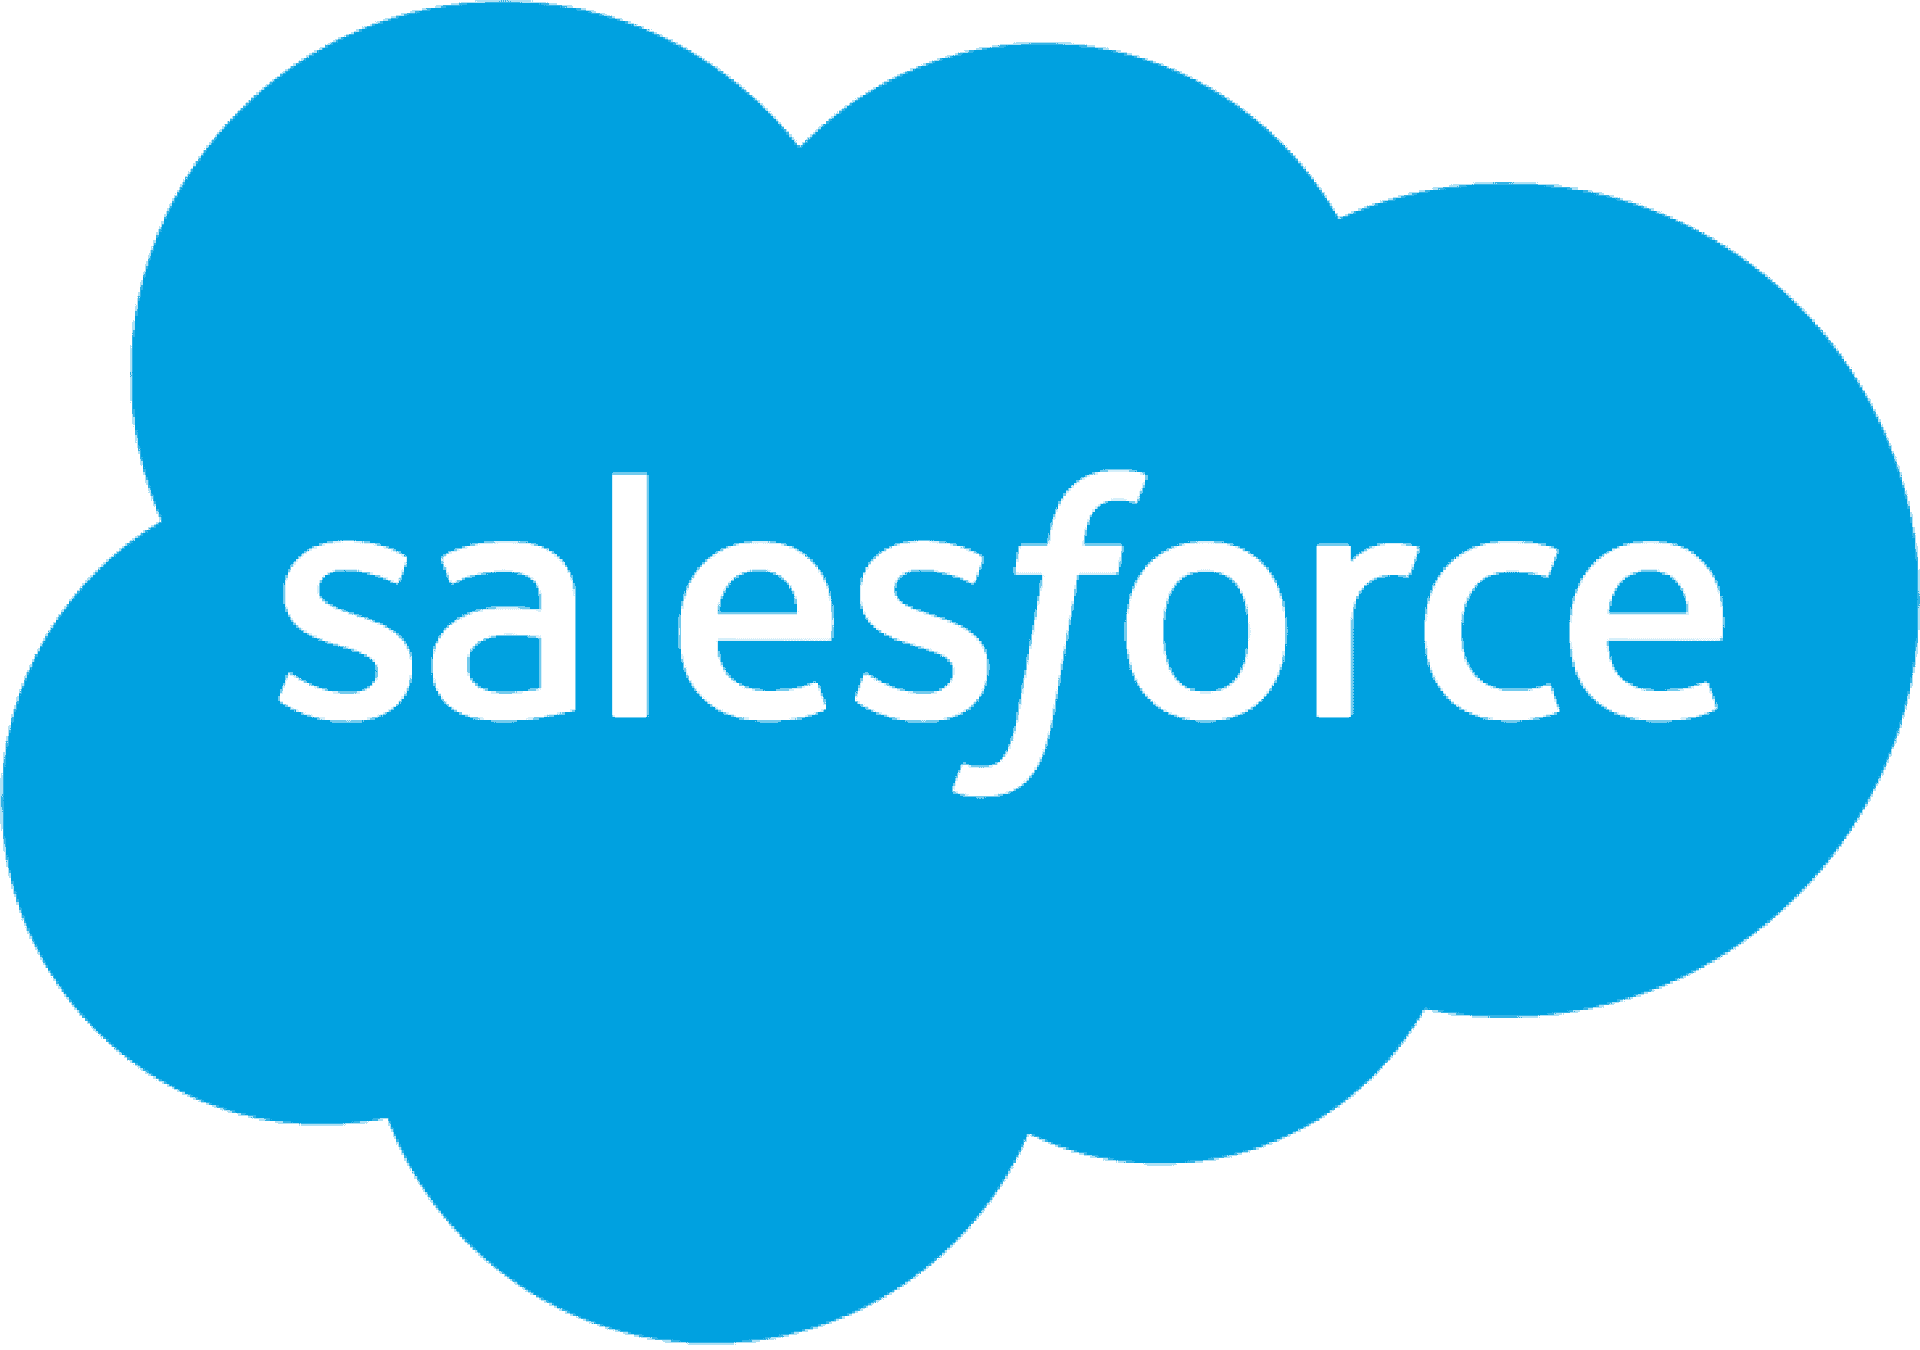 salesforce or hubspot, hubspot or salesforce, salesforce or hubspot which is bigger, which company is bigger salesforce or hubspot 2020, salesforce or hubspot reddit